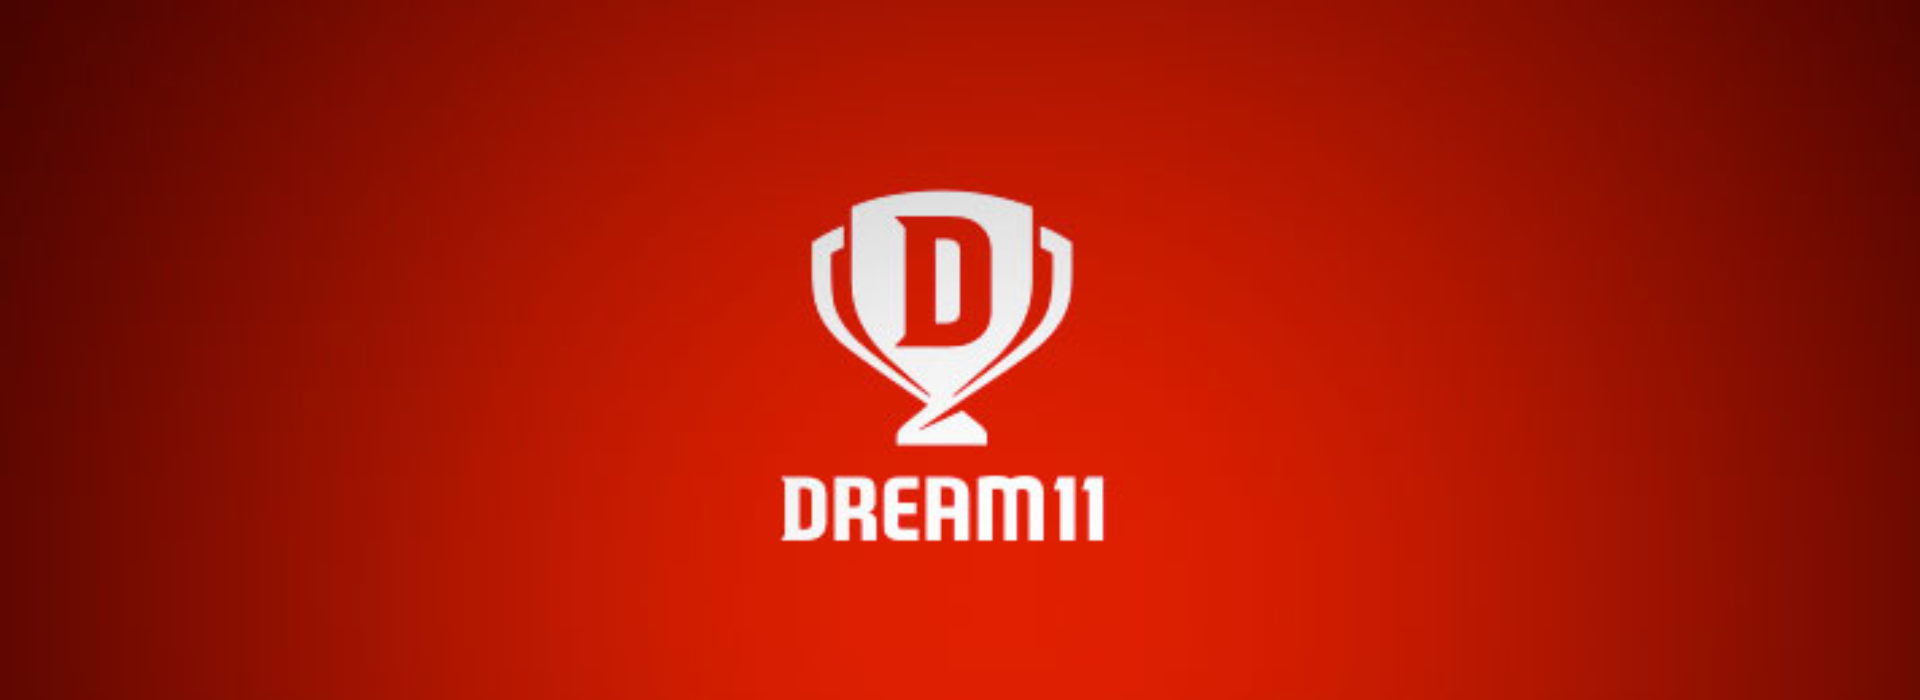 Dream 11 Logo Karnataka law